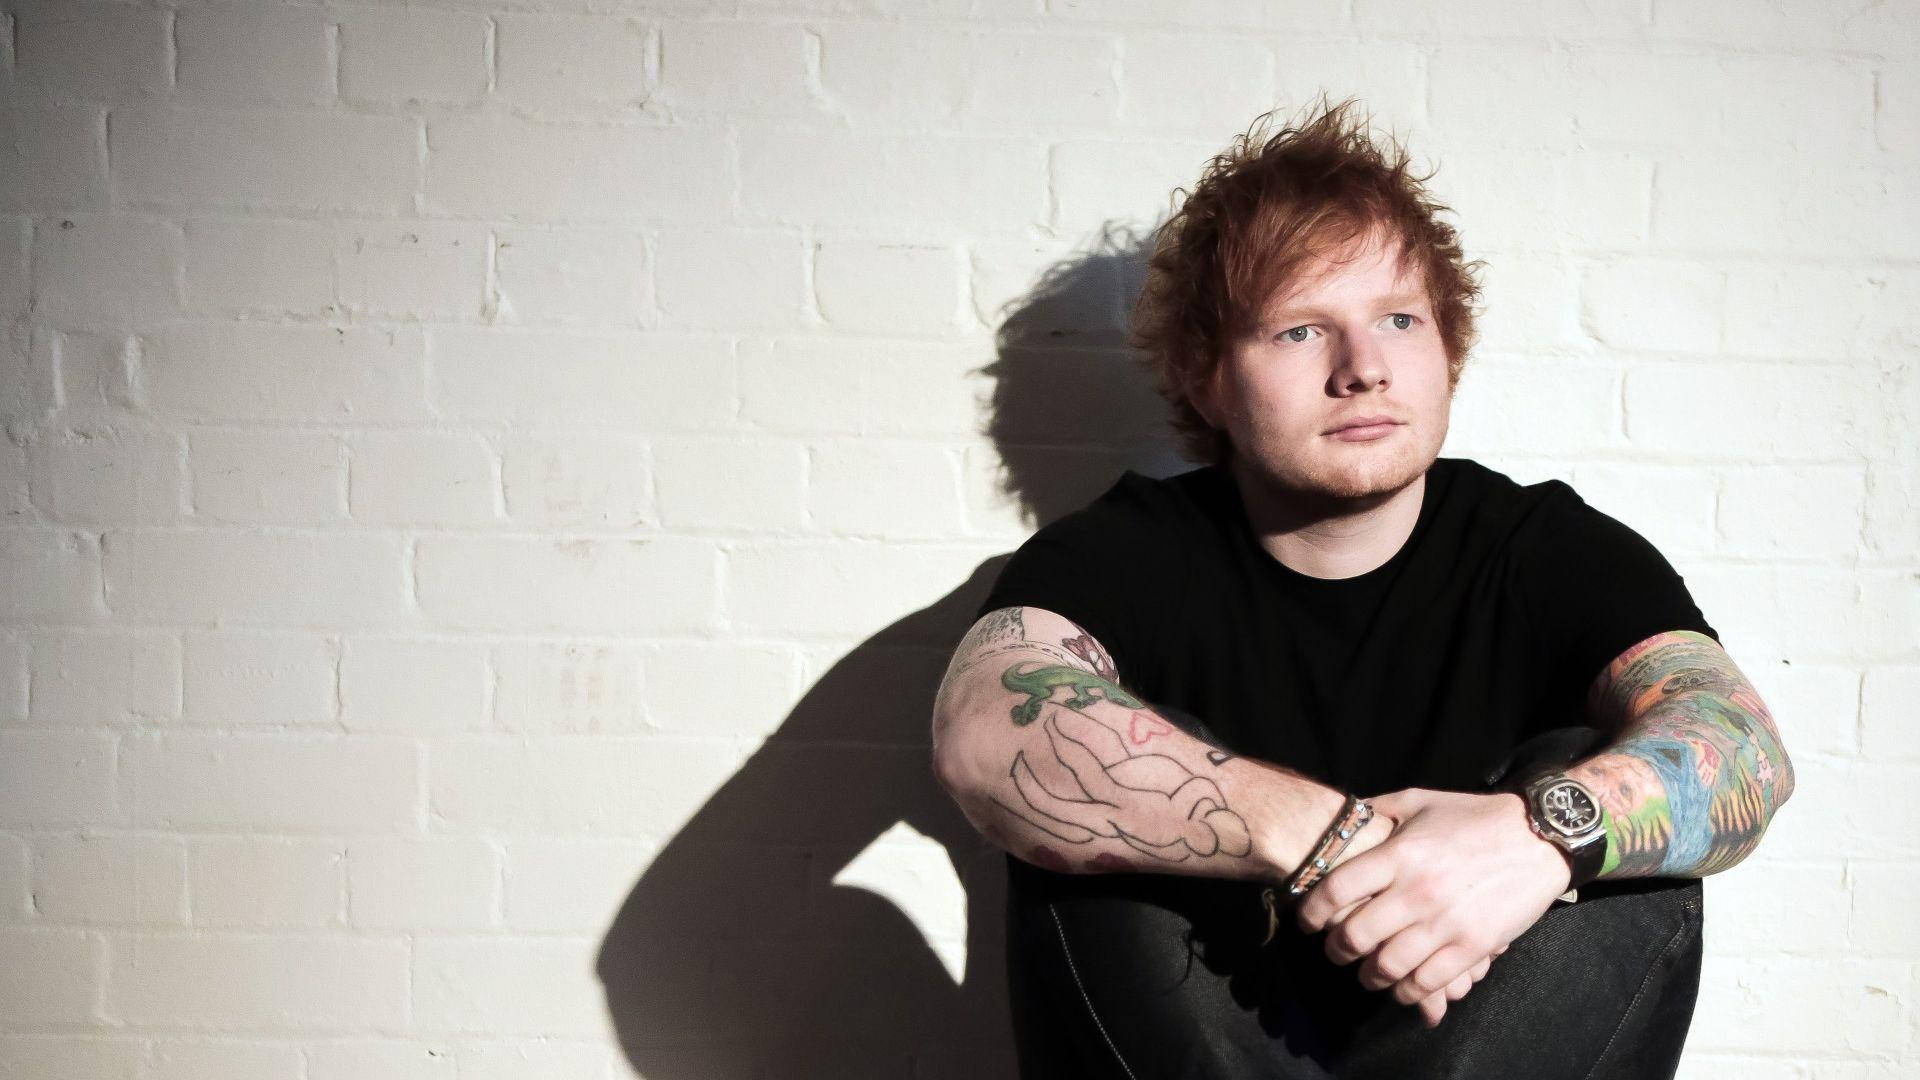 Singer-songwriter Ed Sheeran Posing In A Charming Fashion Background